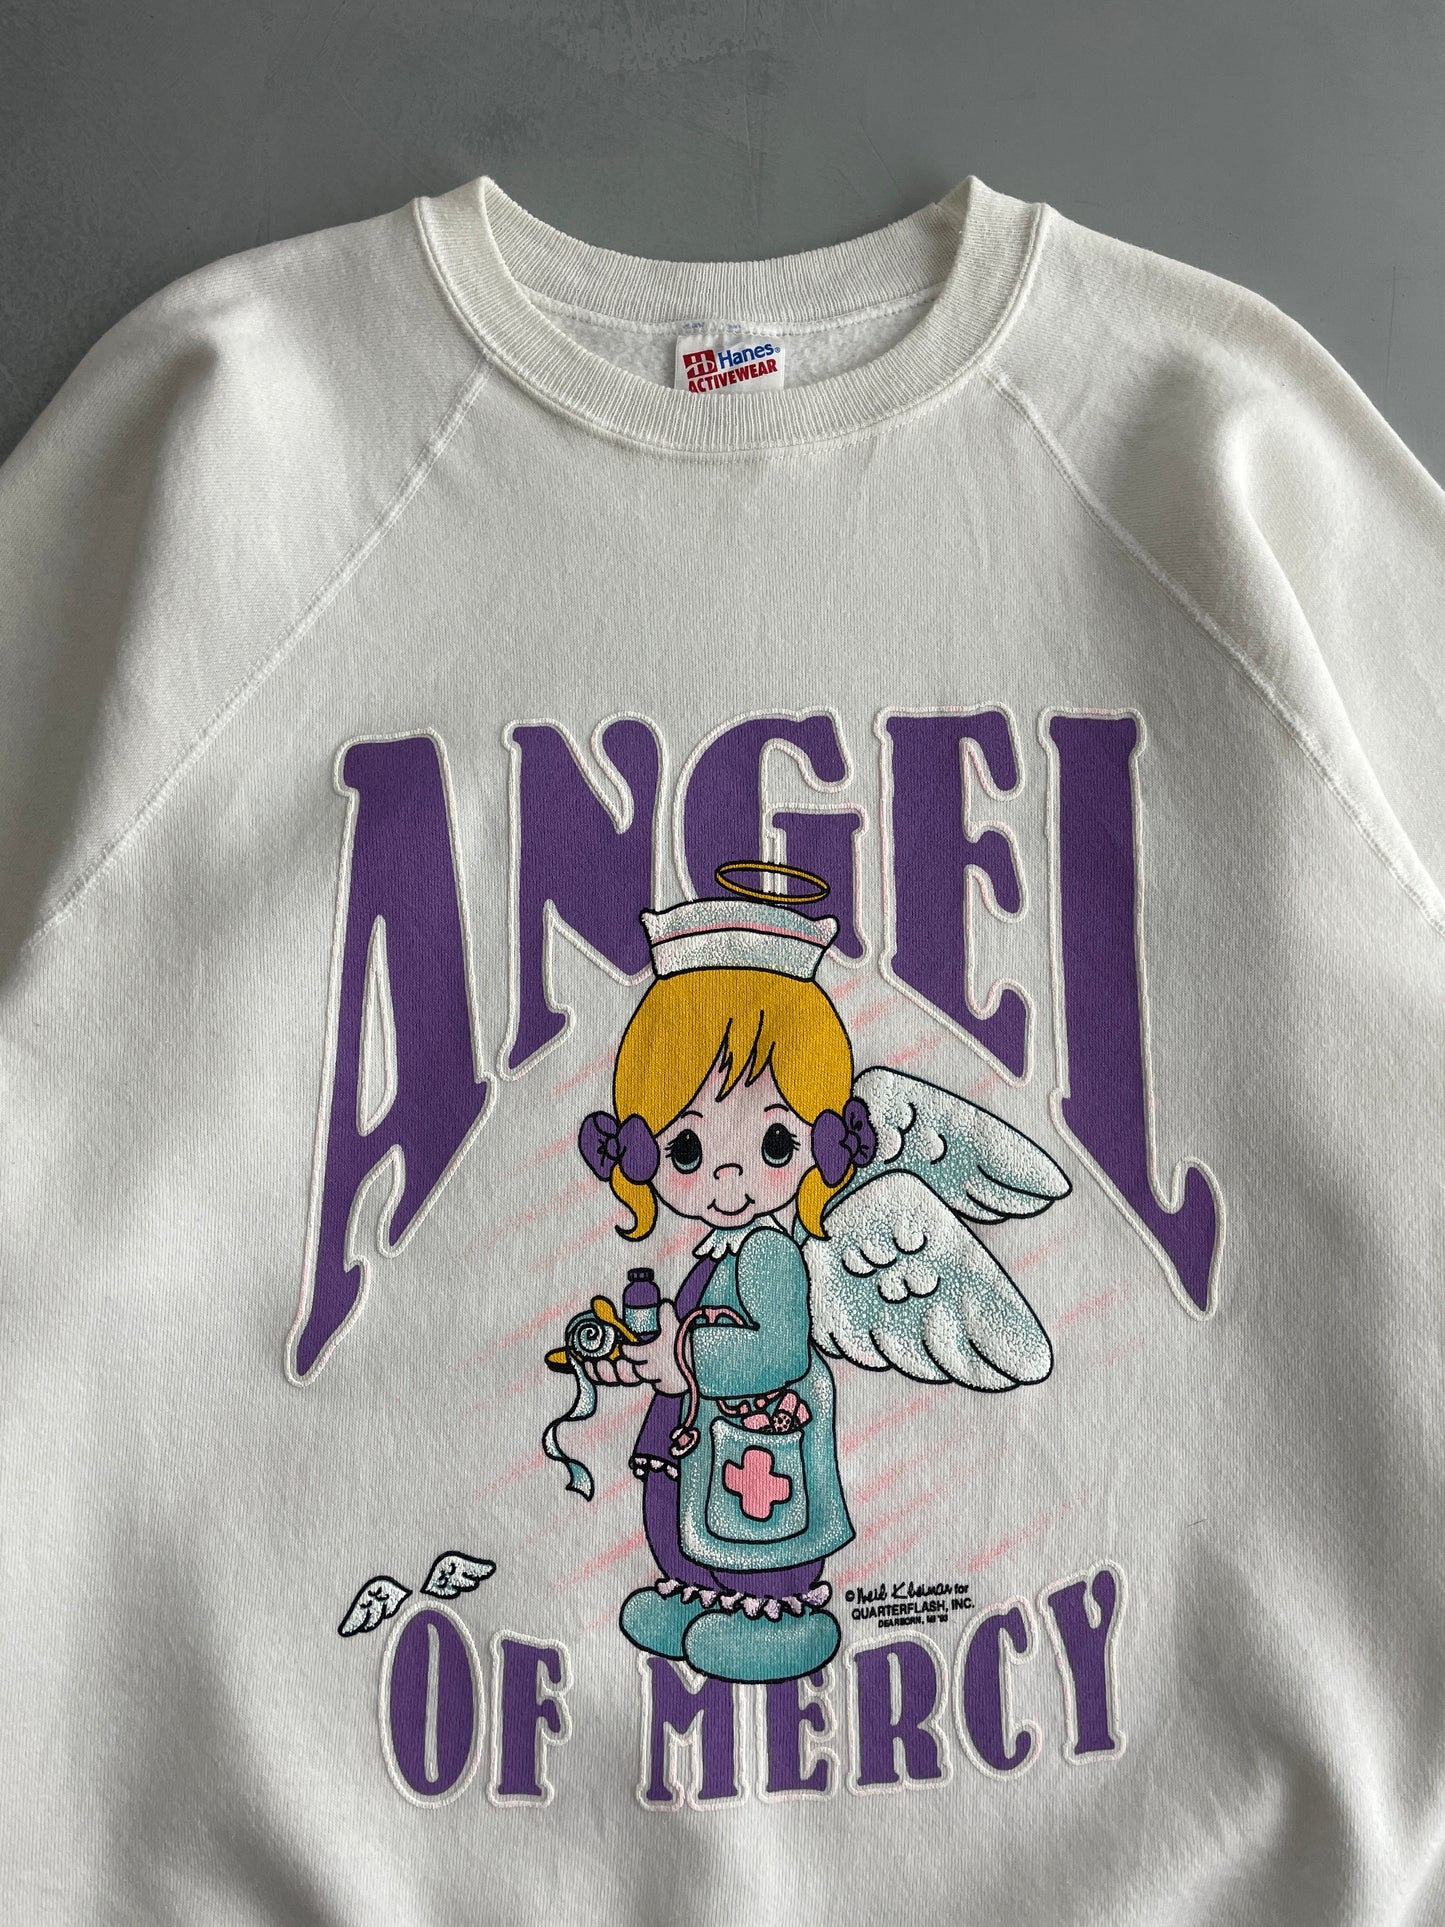 90's Angel Of Mercy Sweatshirt [L]